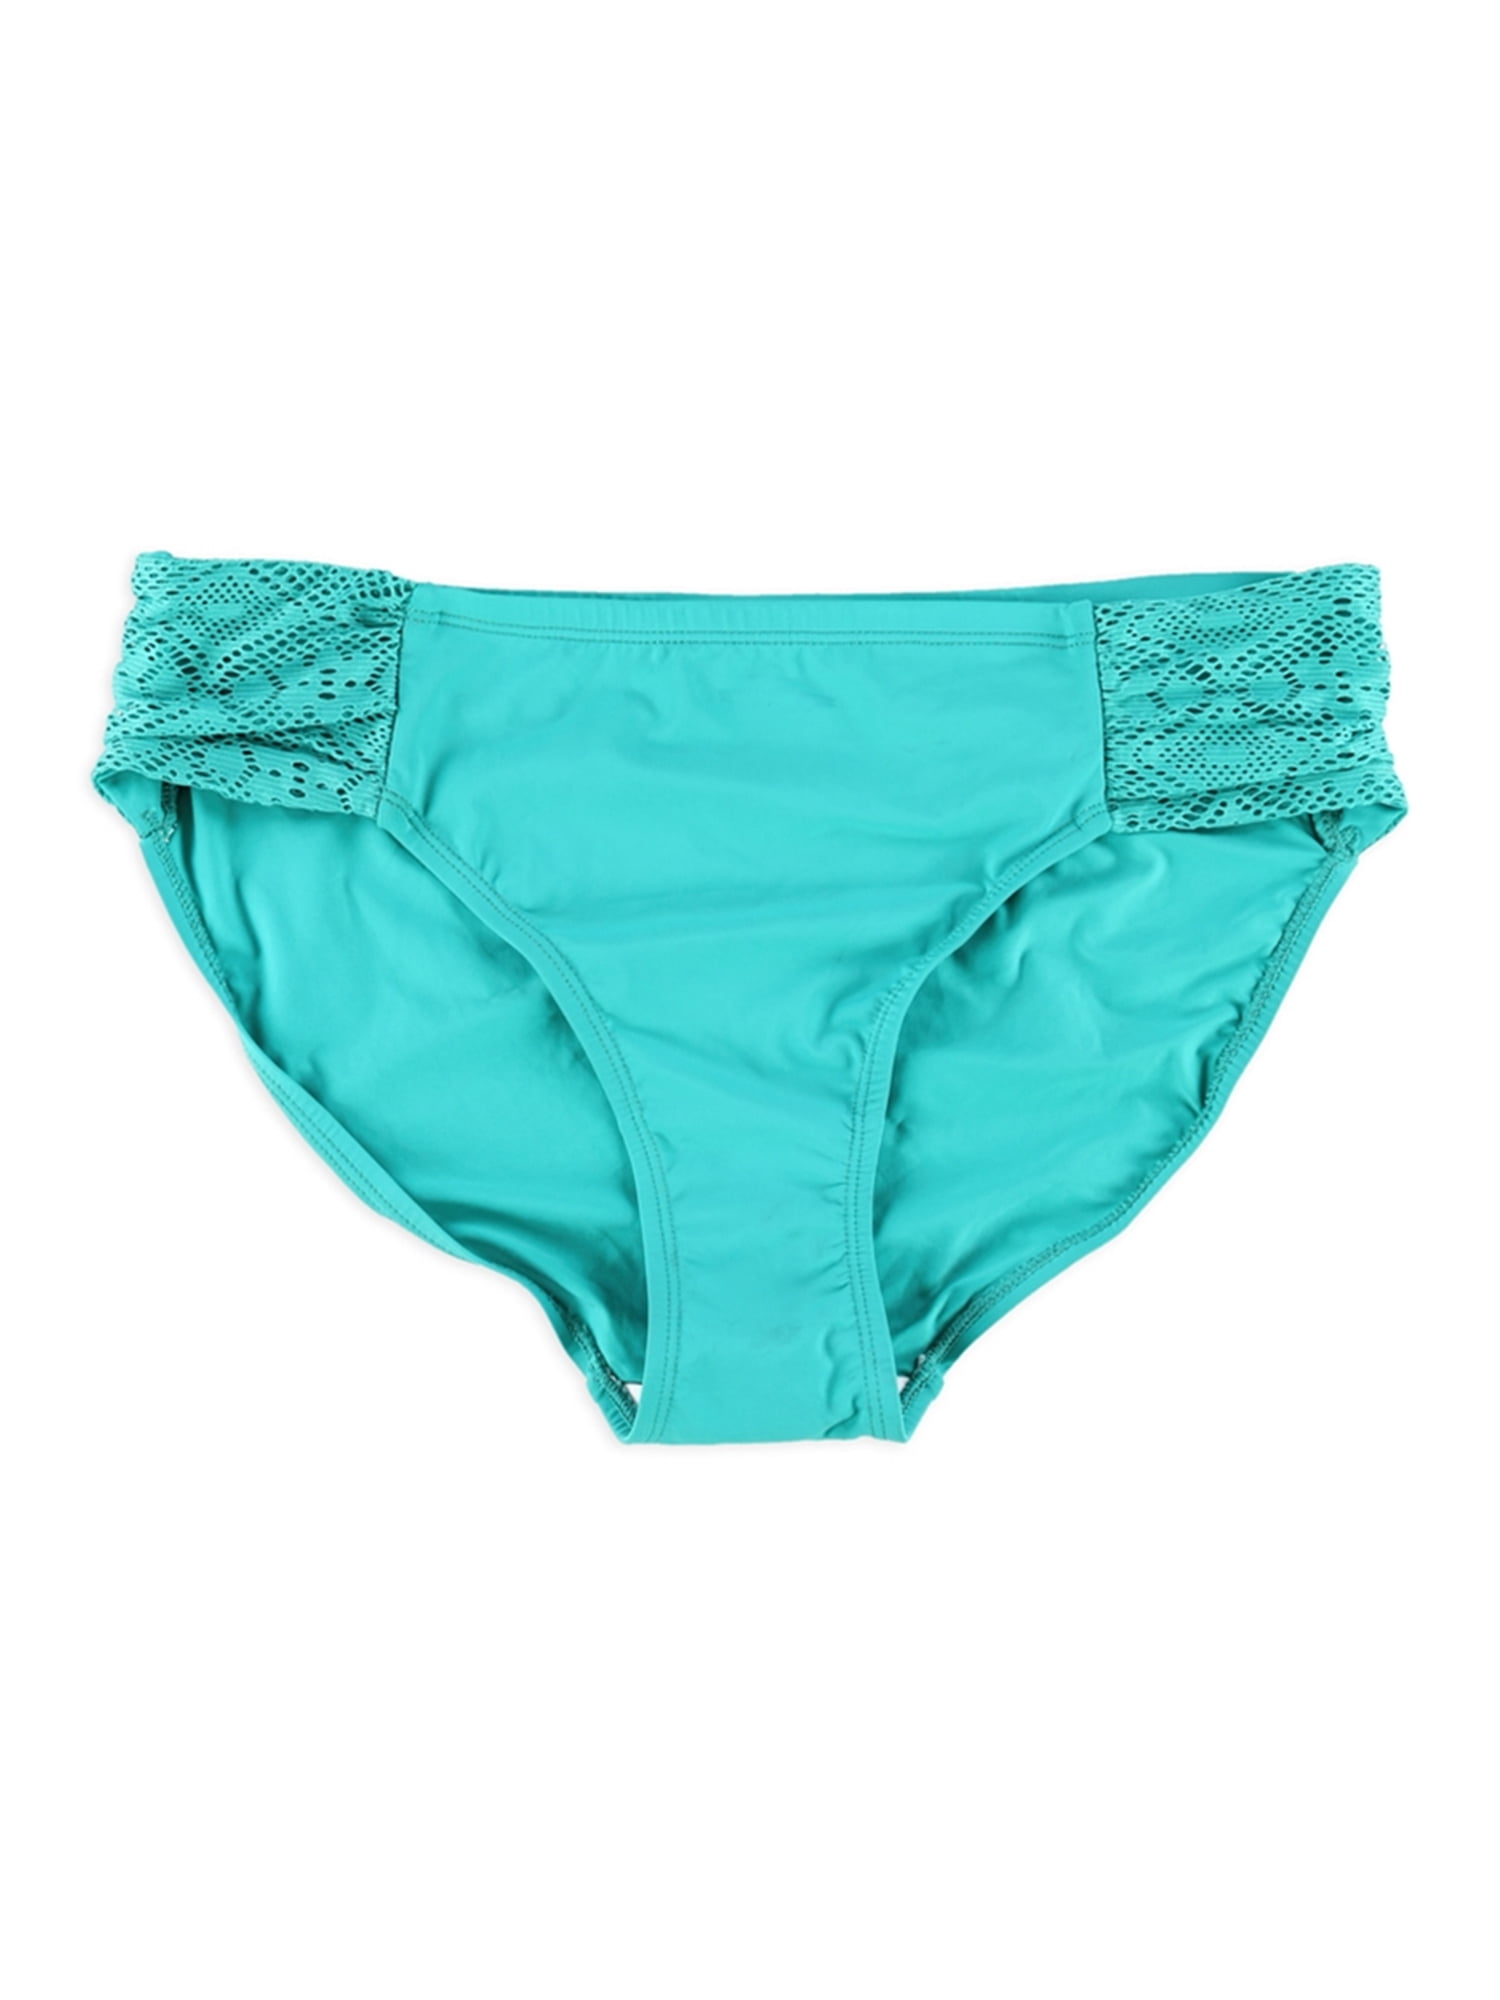 Jones New York Womens Crochet Bikini Swim Bottom jade 10 | Walmart Canada